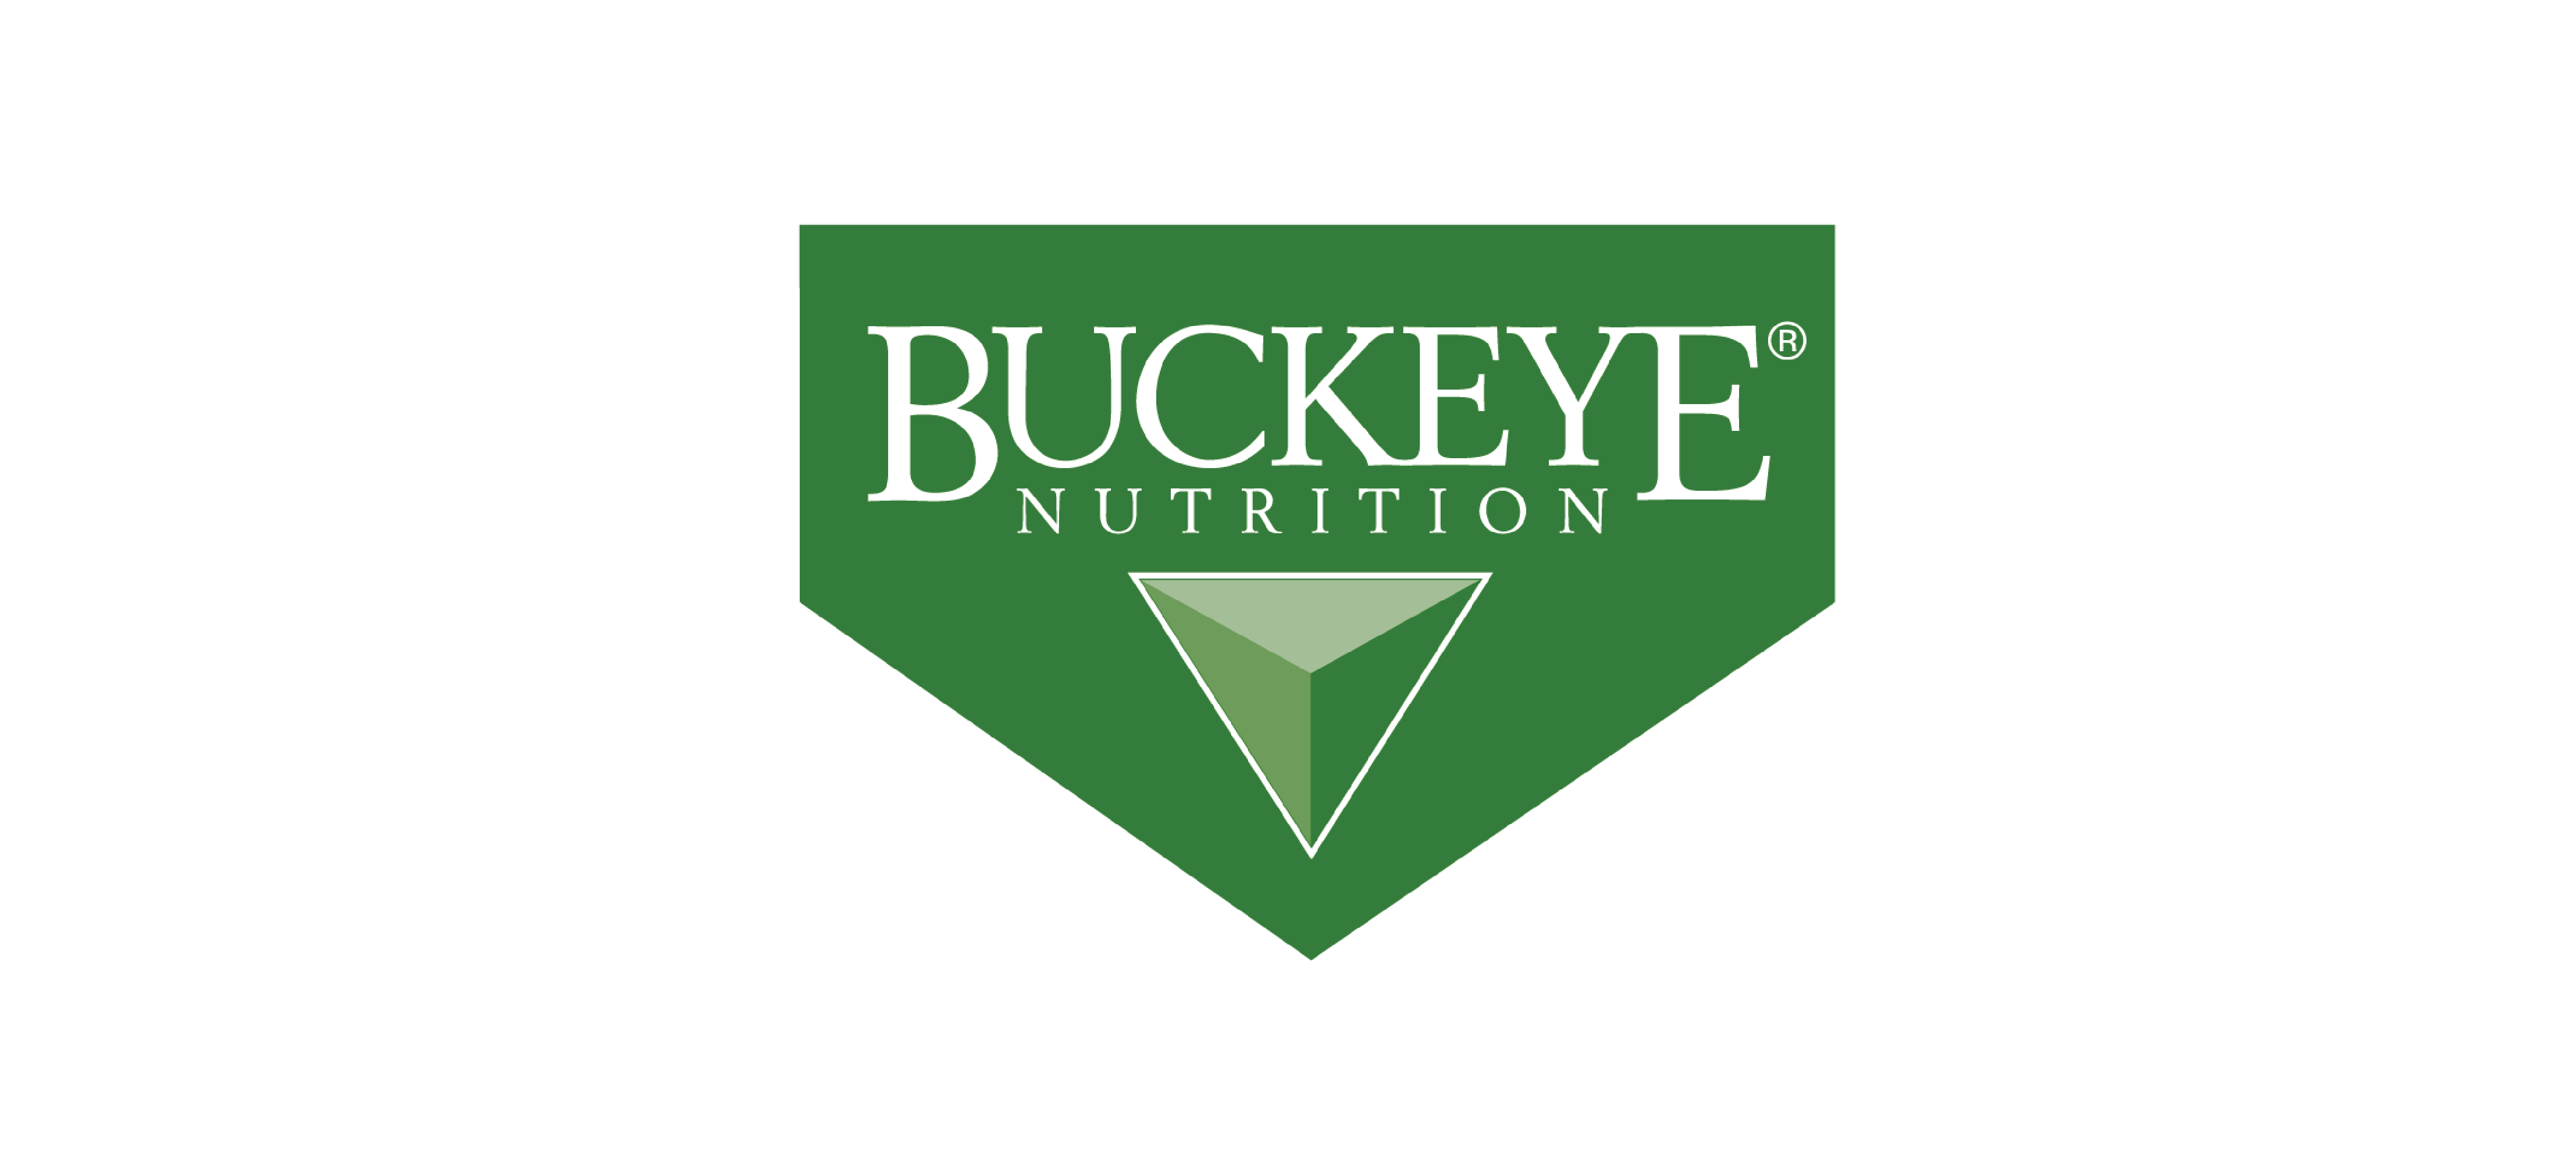 BUCKEYE™ Nutrition